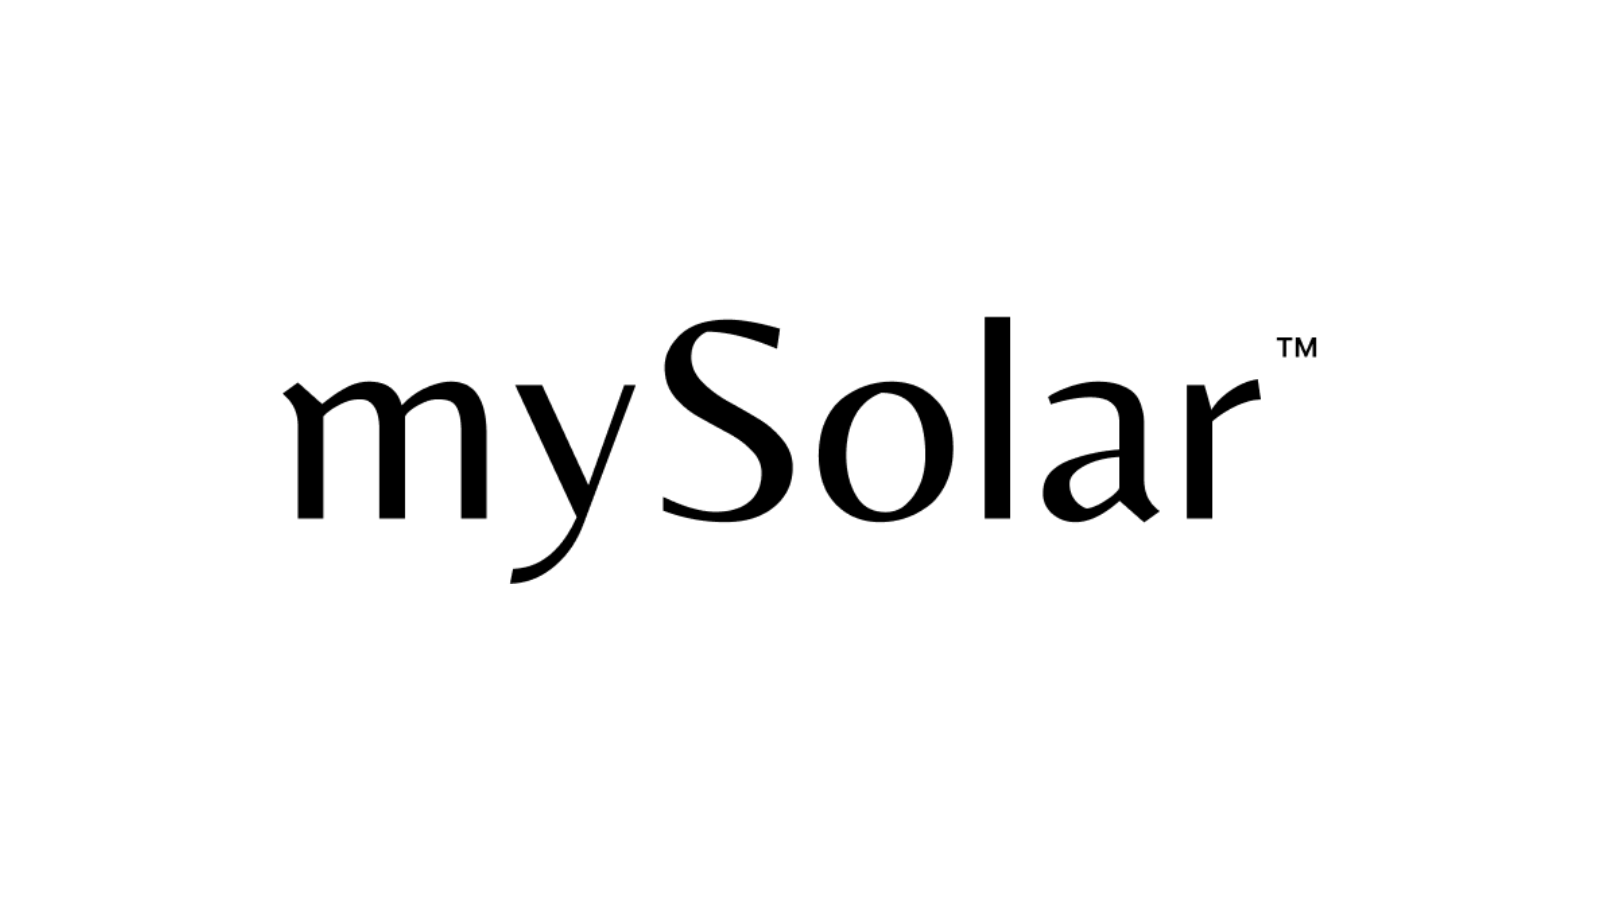 mySolar Launches Sol